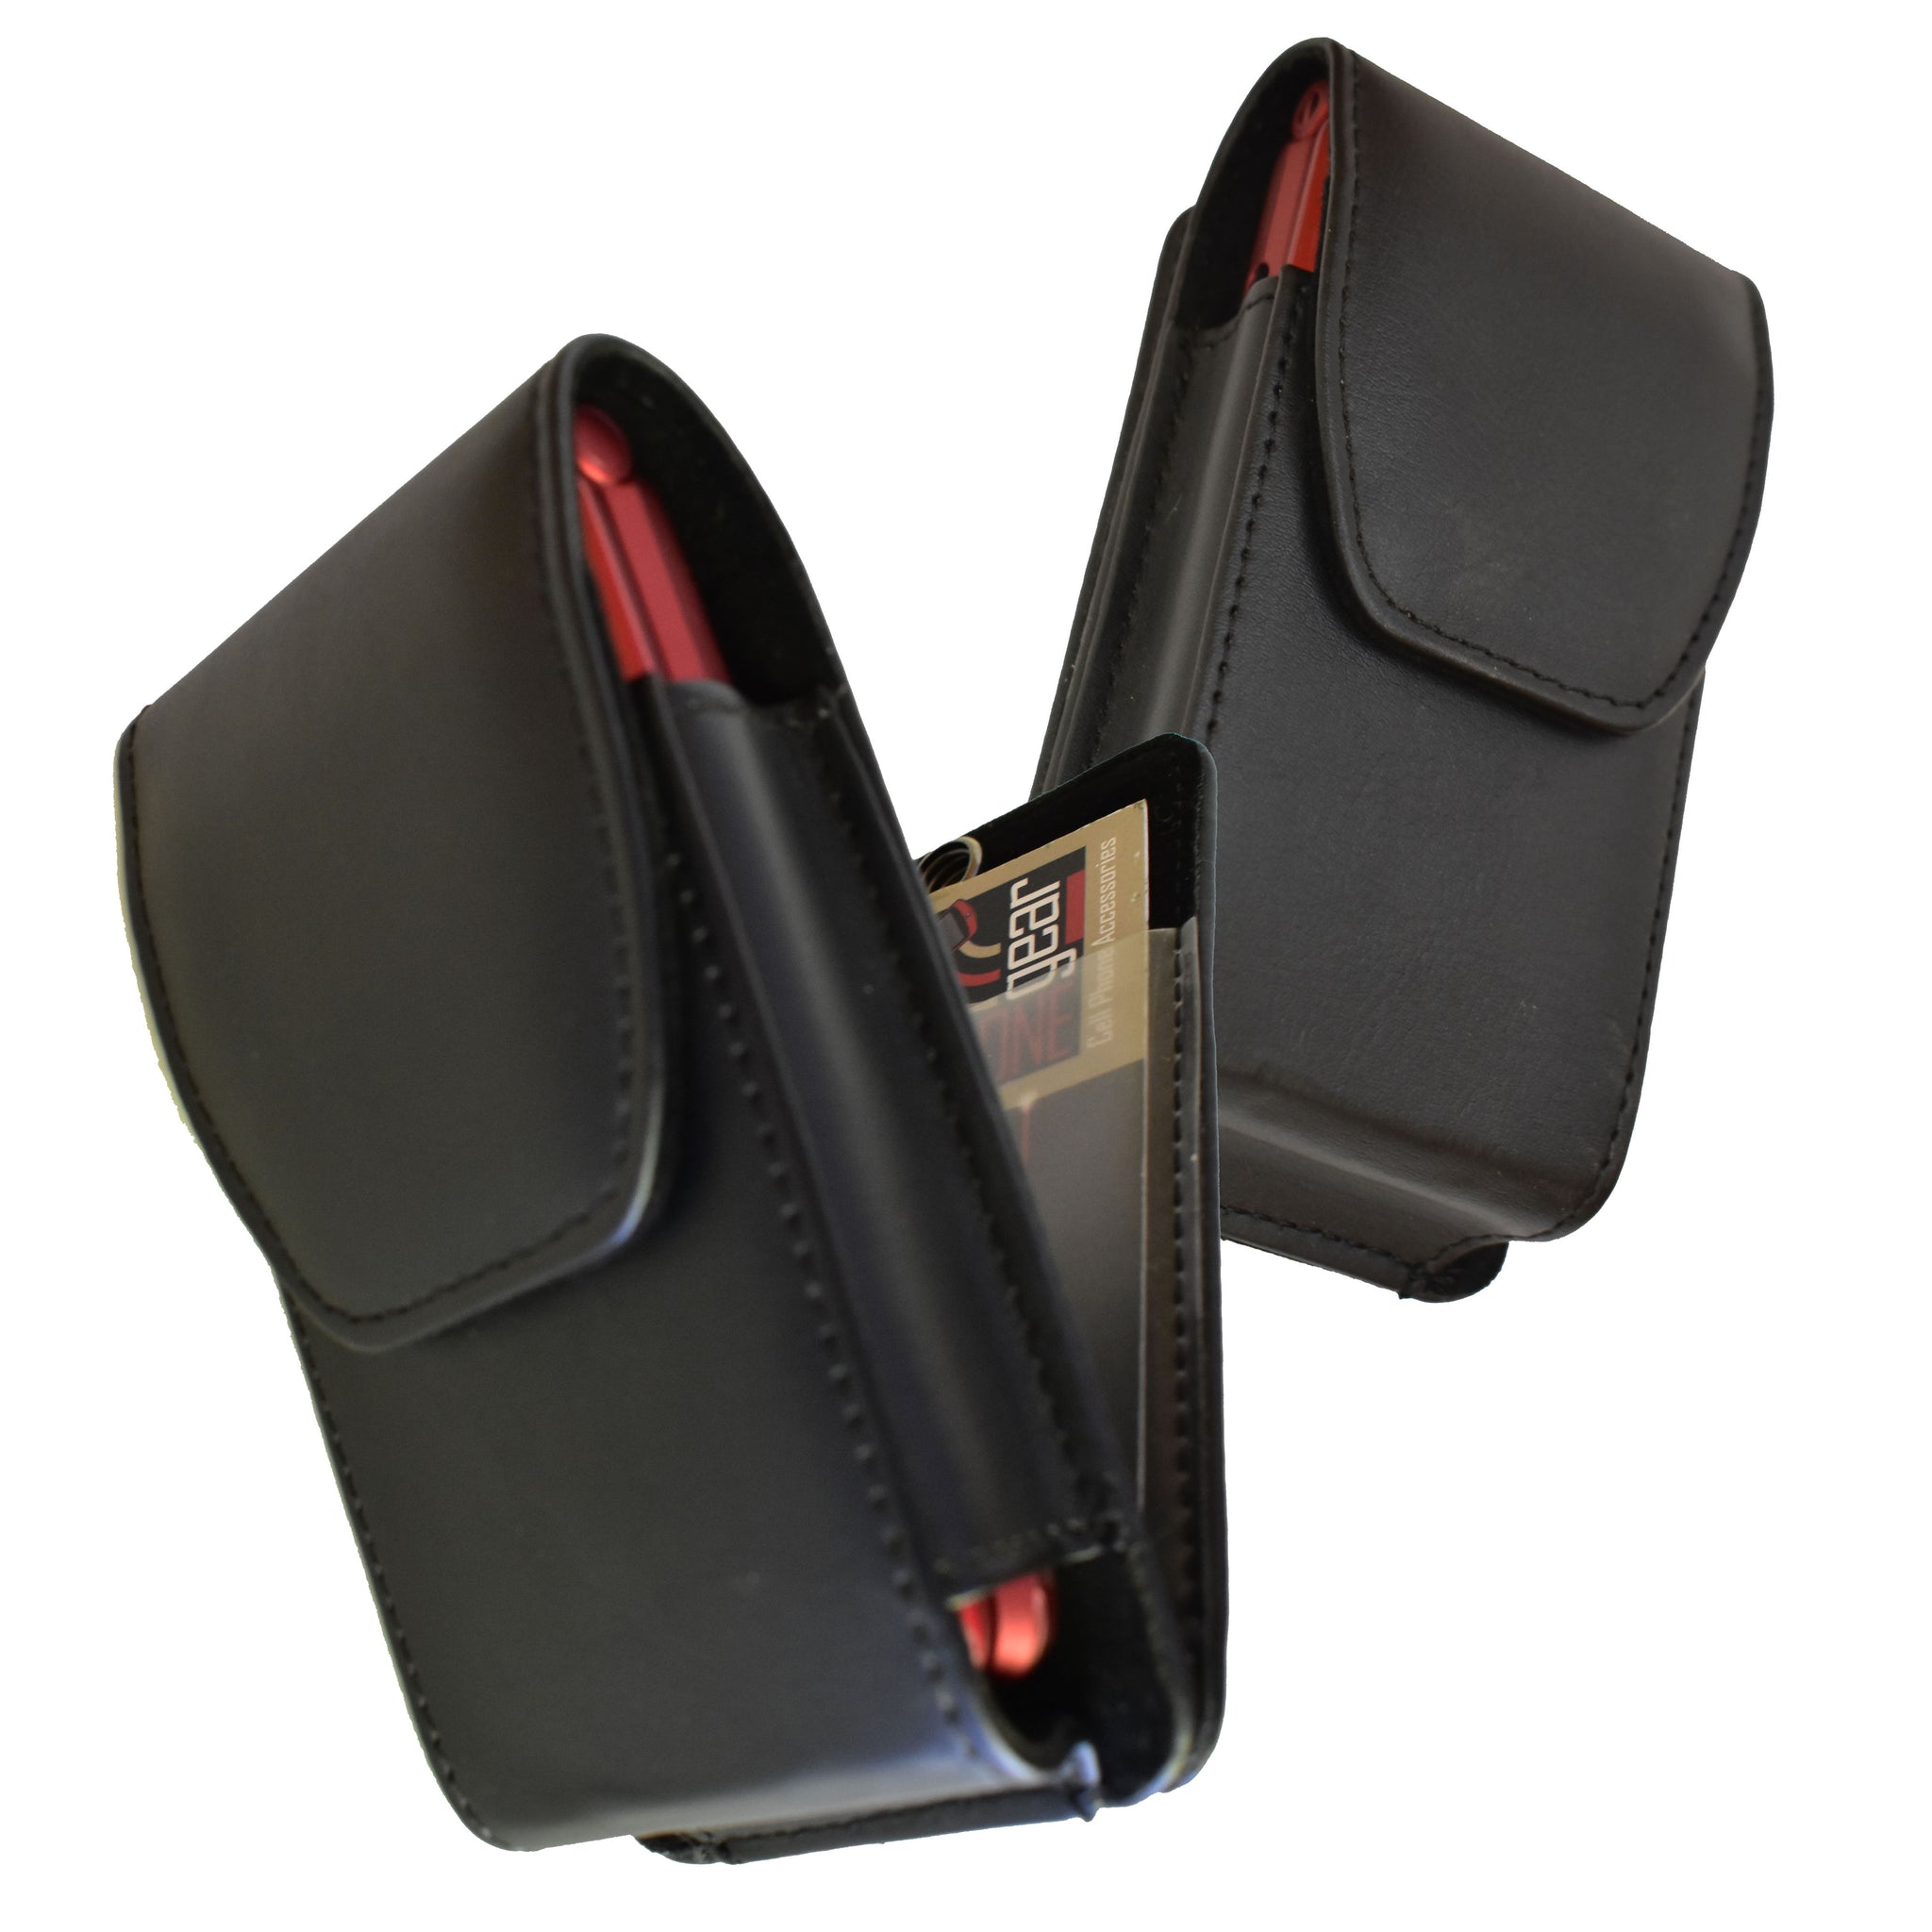 Buy Flip Card Holder for Phone Cases, Leather Band type Card Holder for  Phone Wallet Cases